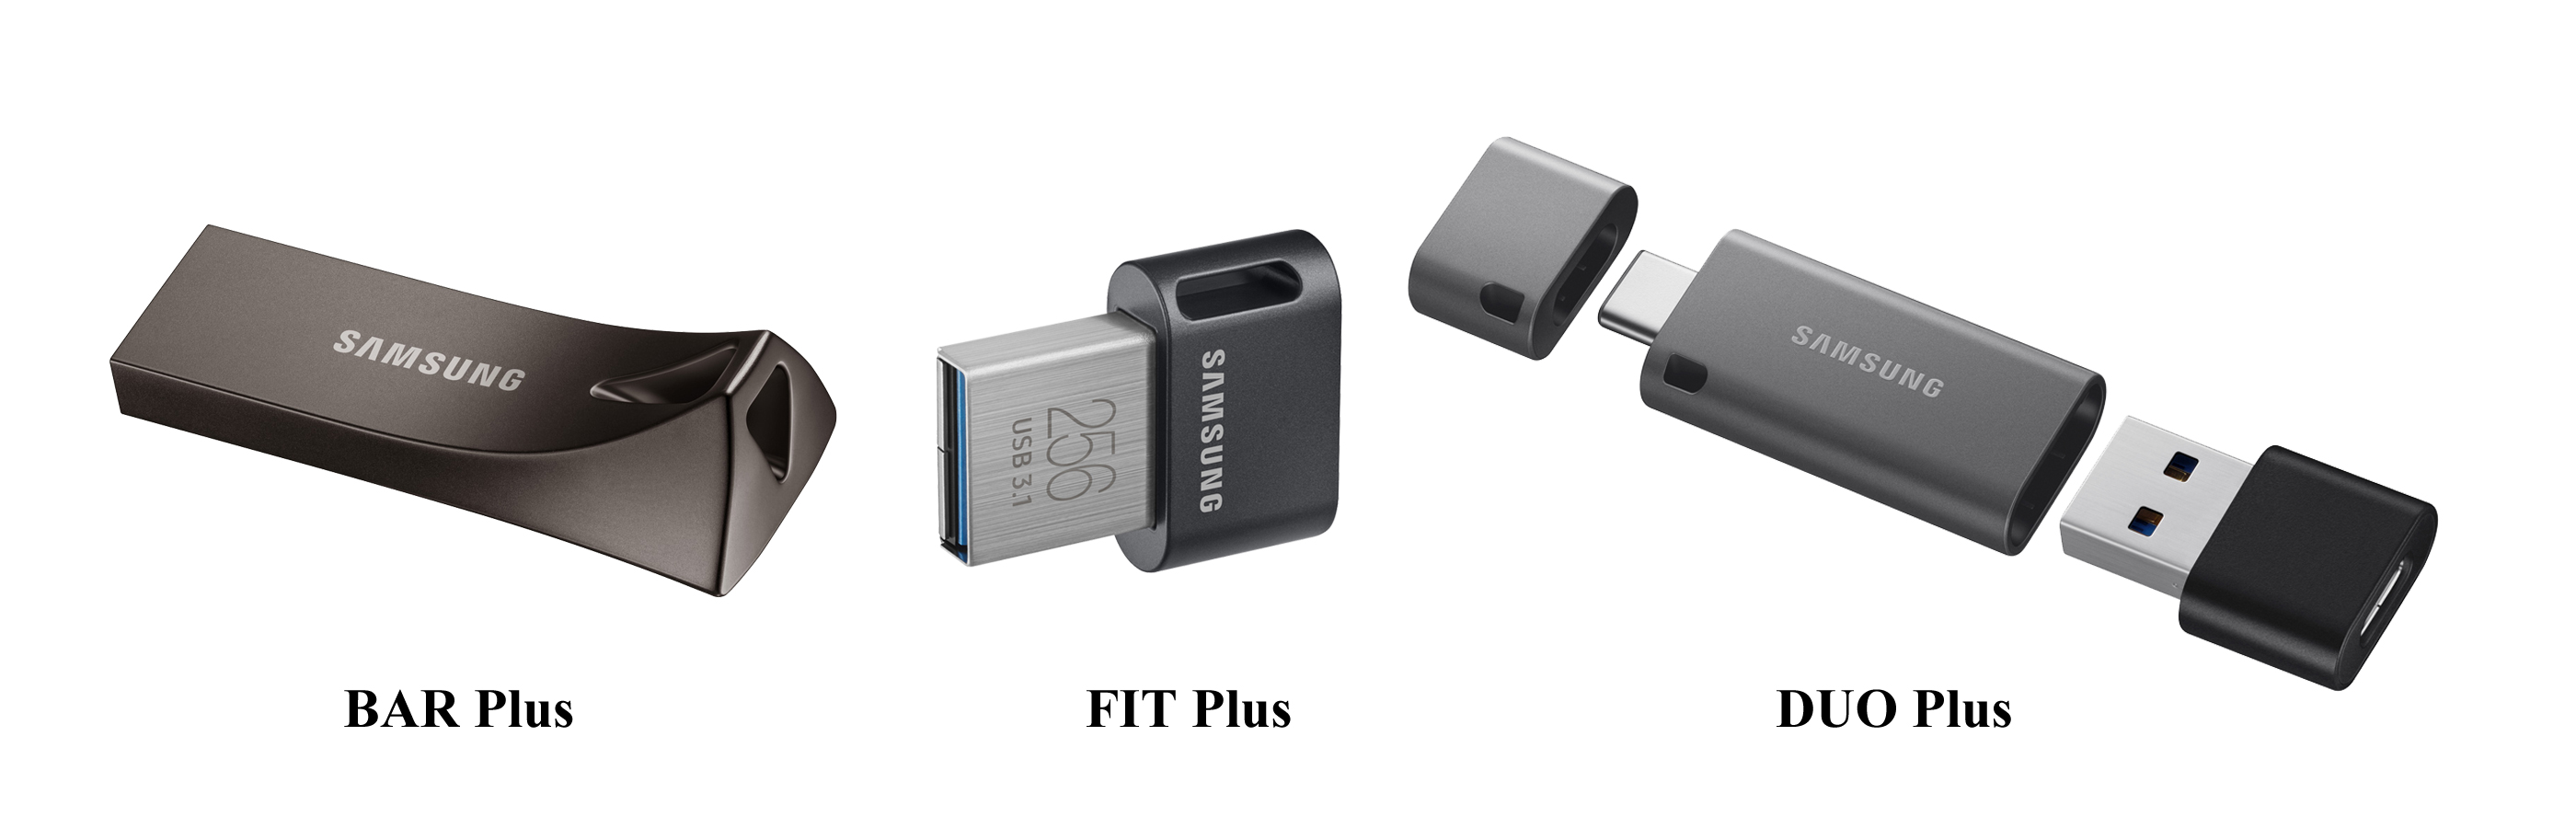 knot radar Agent USB 3.1対応Samsung USBフラッシュメモリー｢BAR Plus」「FIT Plus」「DUO Plus」を9月7日（金）より販売 –  ITGマーケティング株式会社